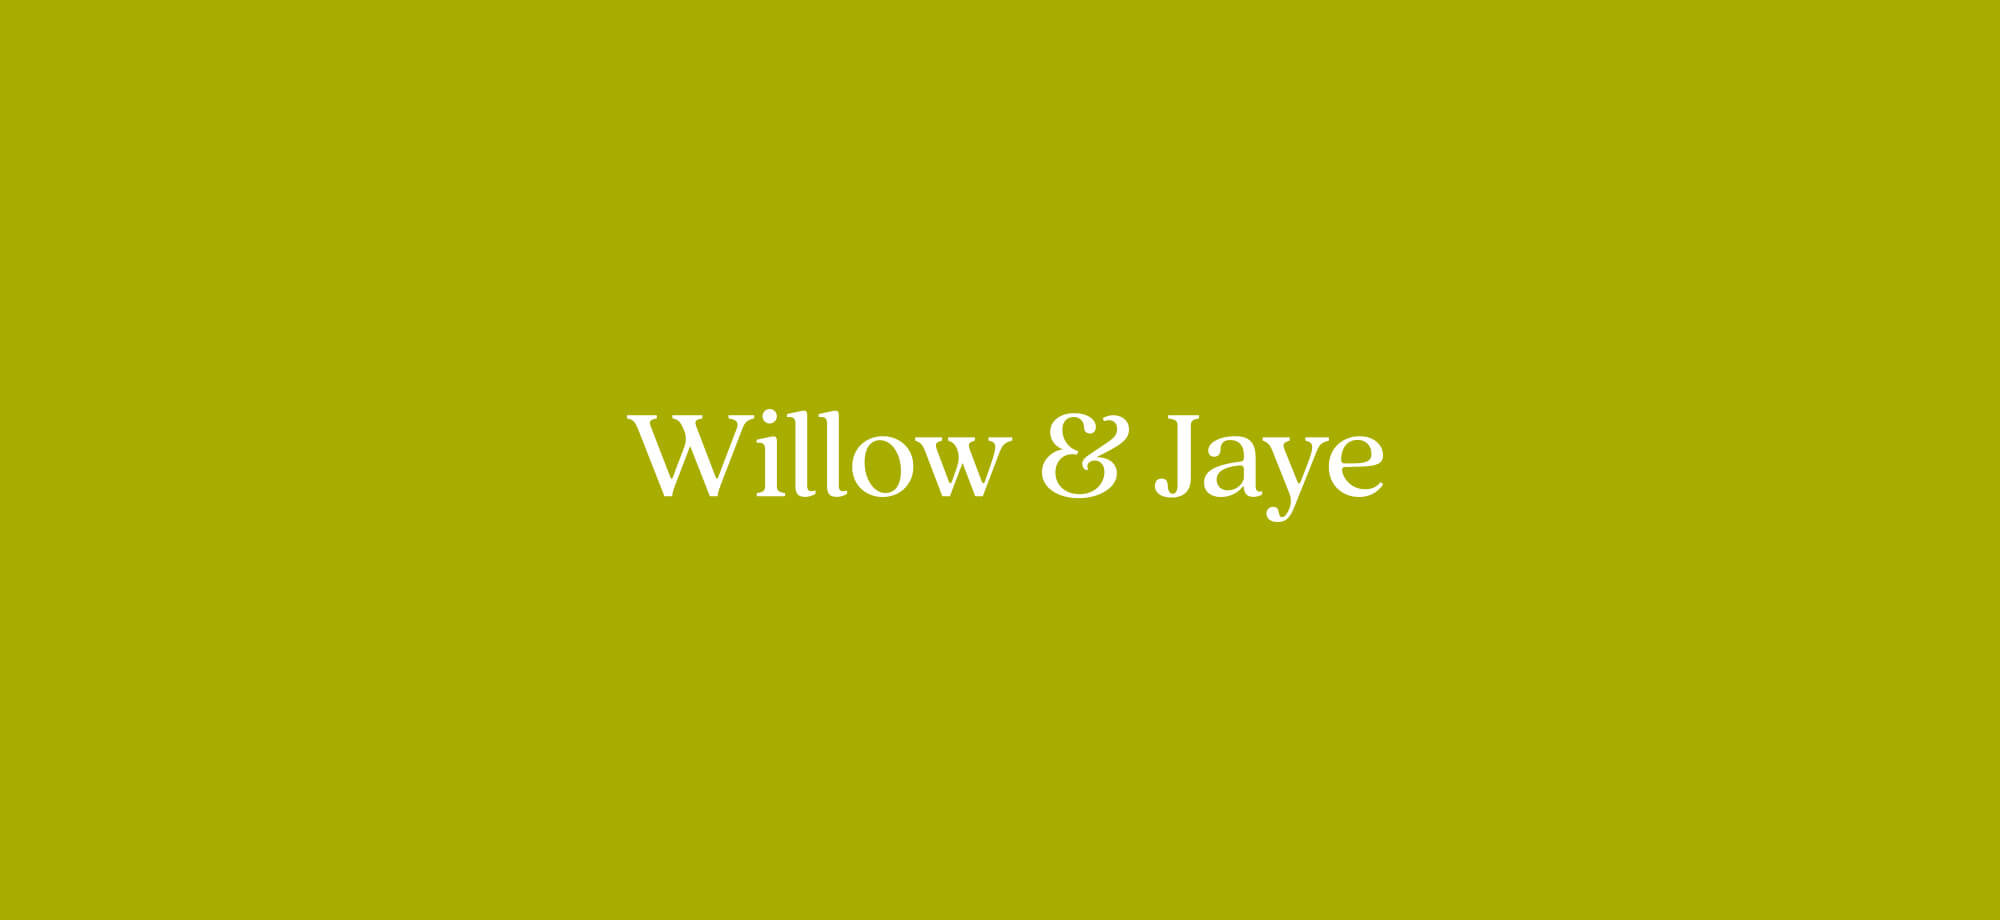 Willow & Jaye word mark